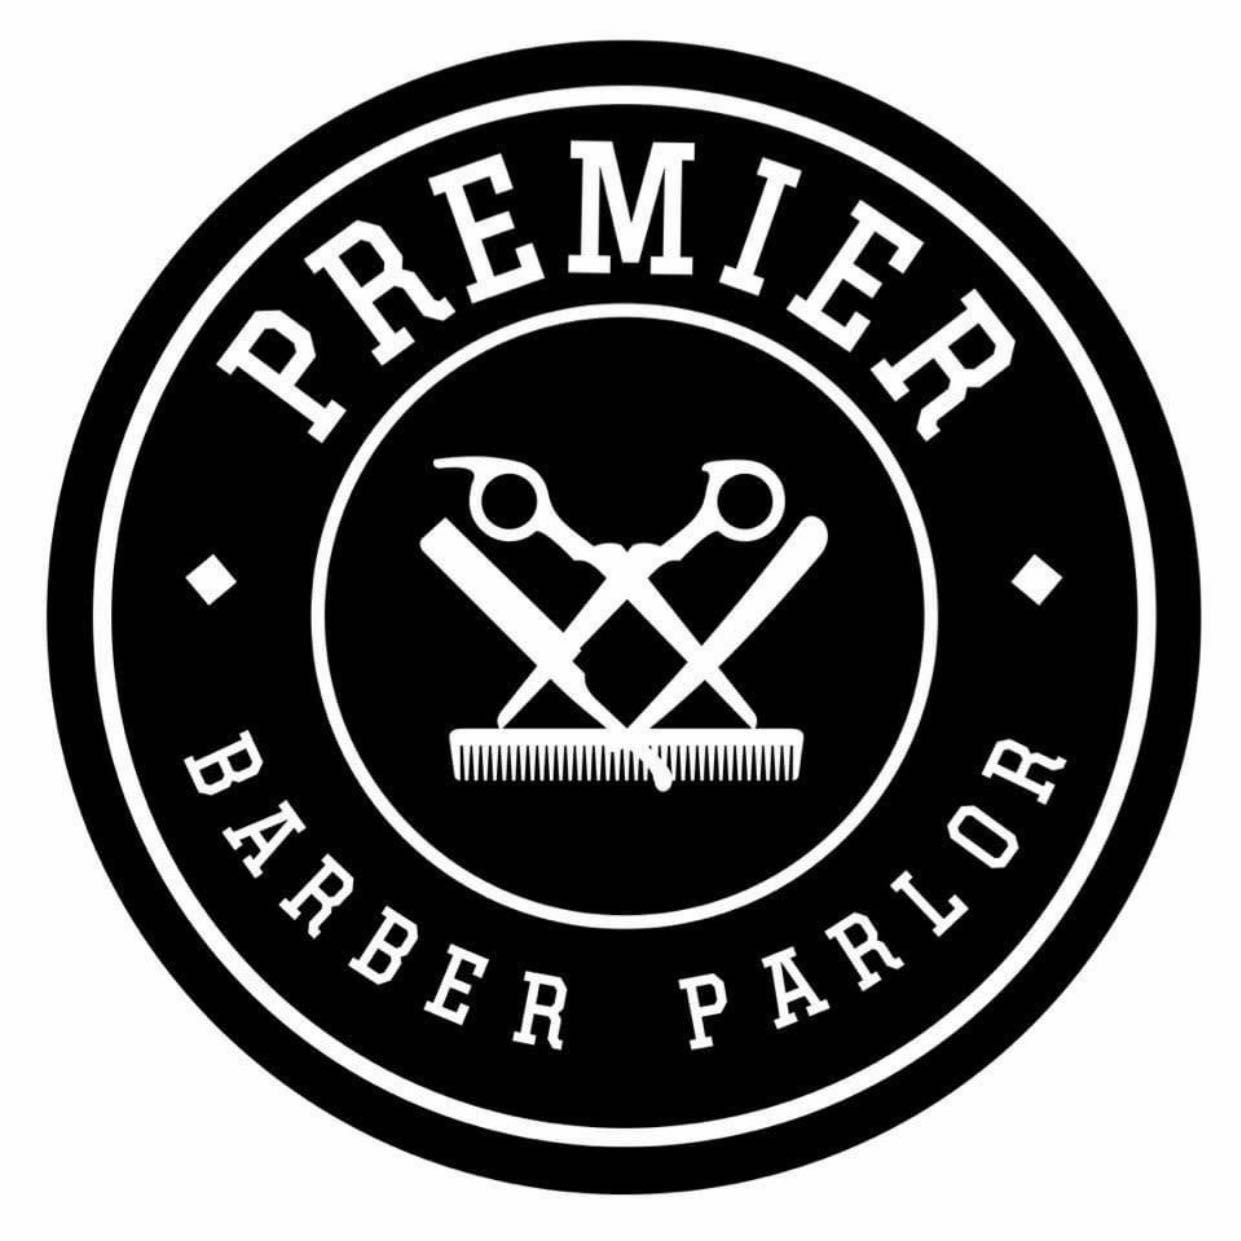 Mike Gomez-Premier Barber Parlor, 1415 18th St, Bakersfield, 93301